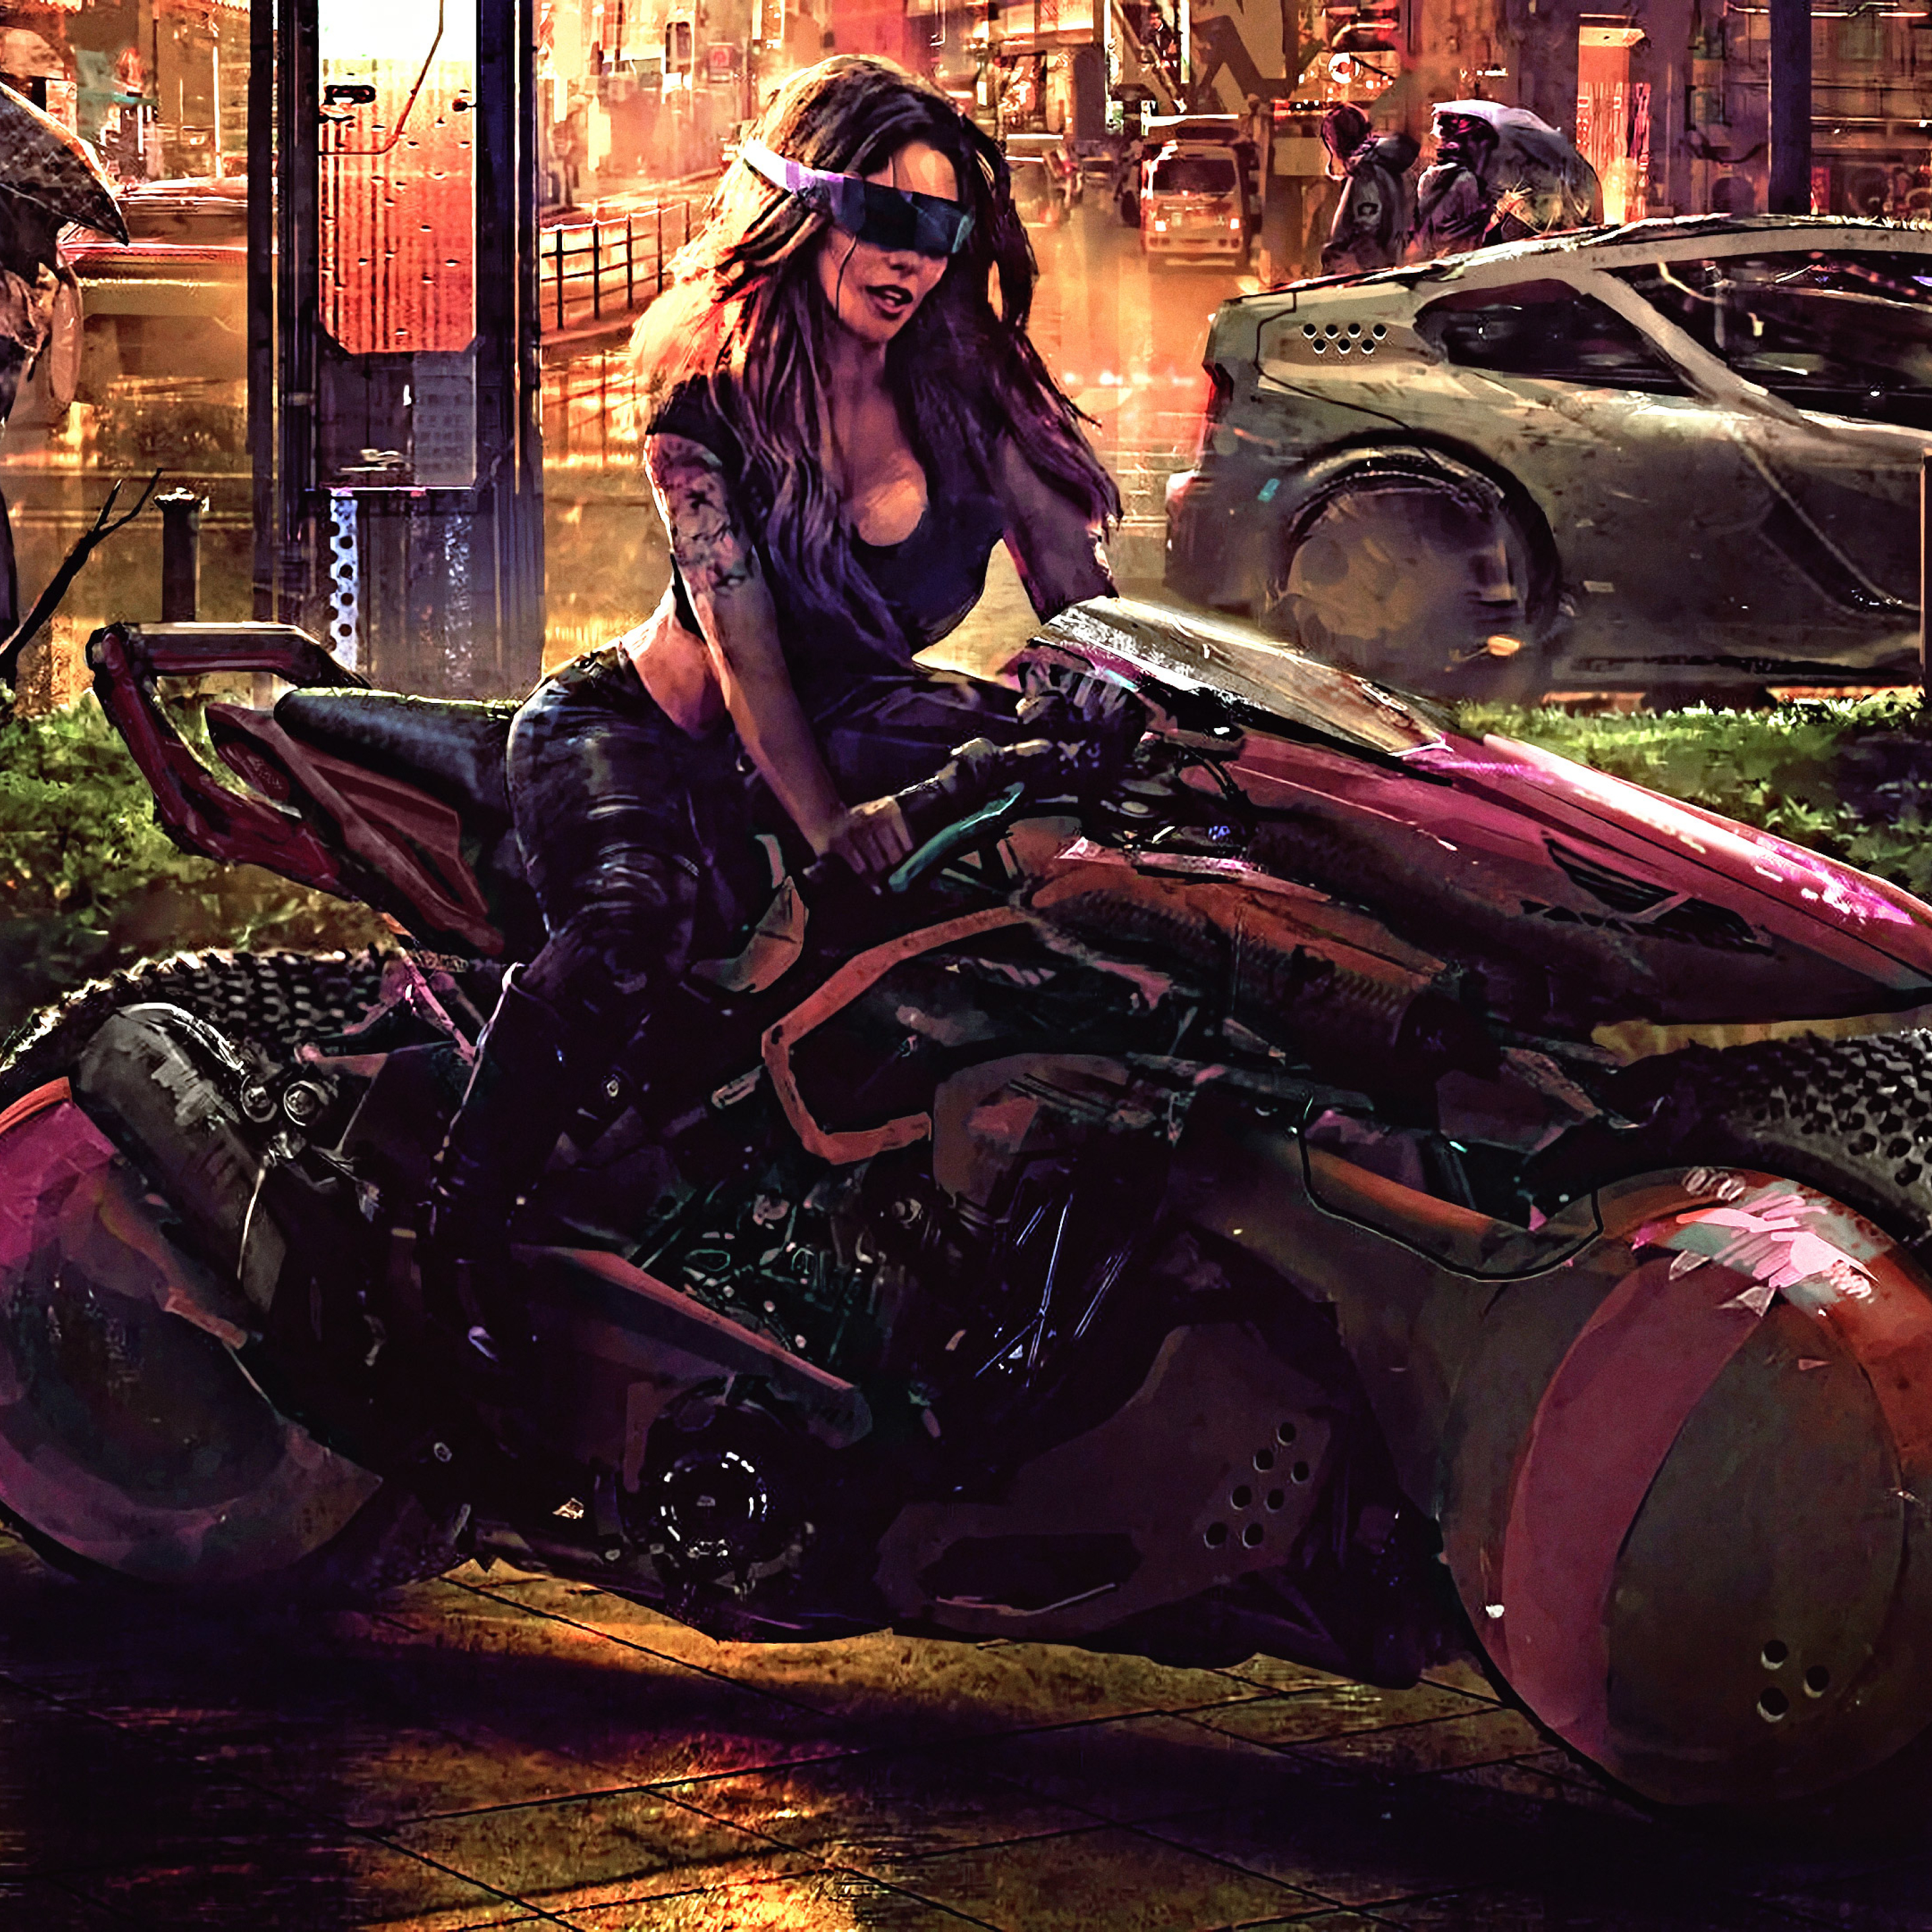 2932x2932 Cyberpunk Woman in Motorcycle Ipad Pro Retina Display Wallpaper, ...